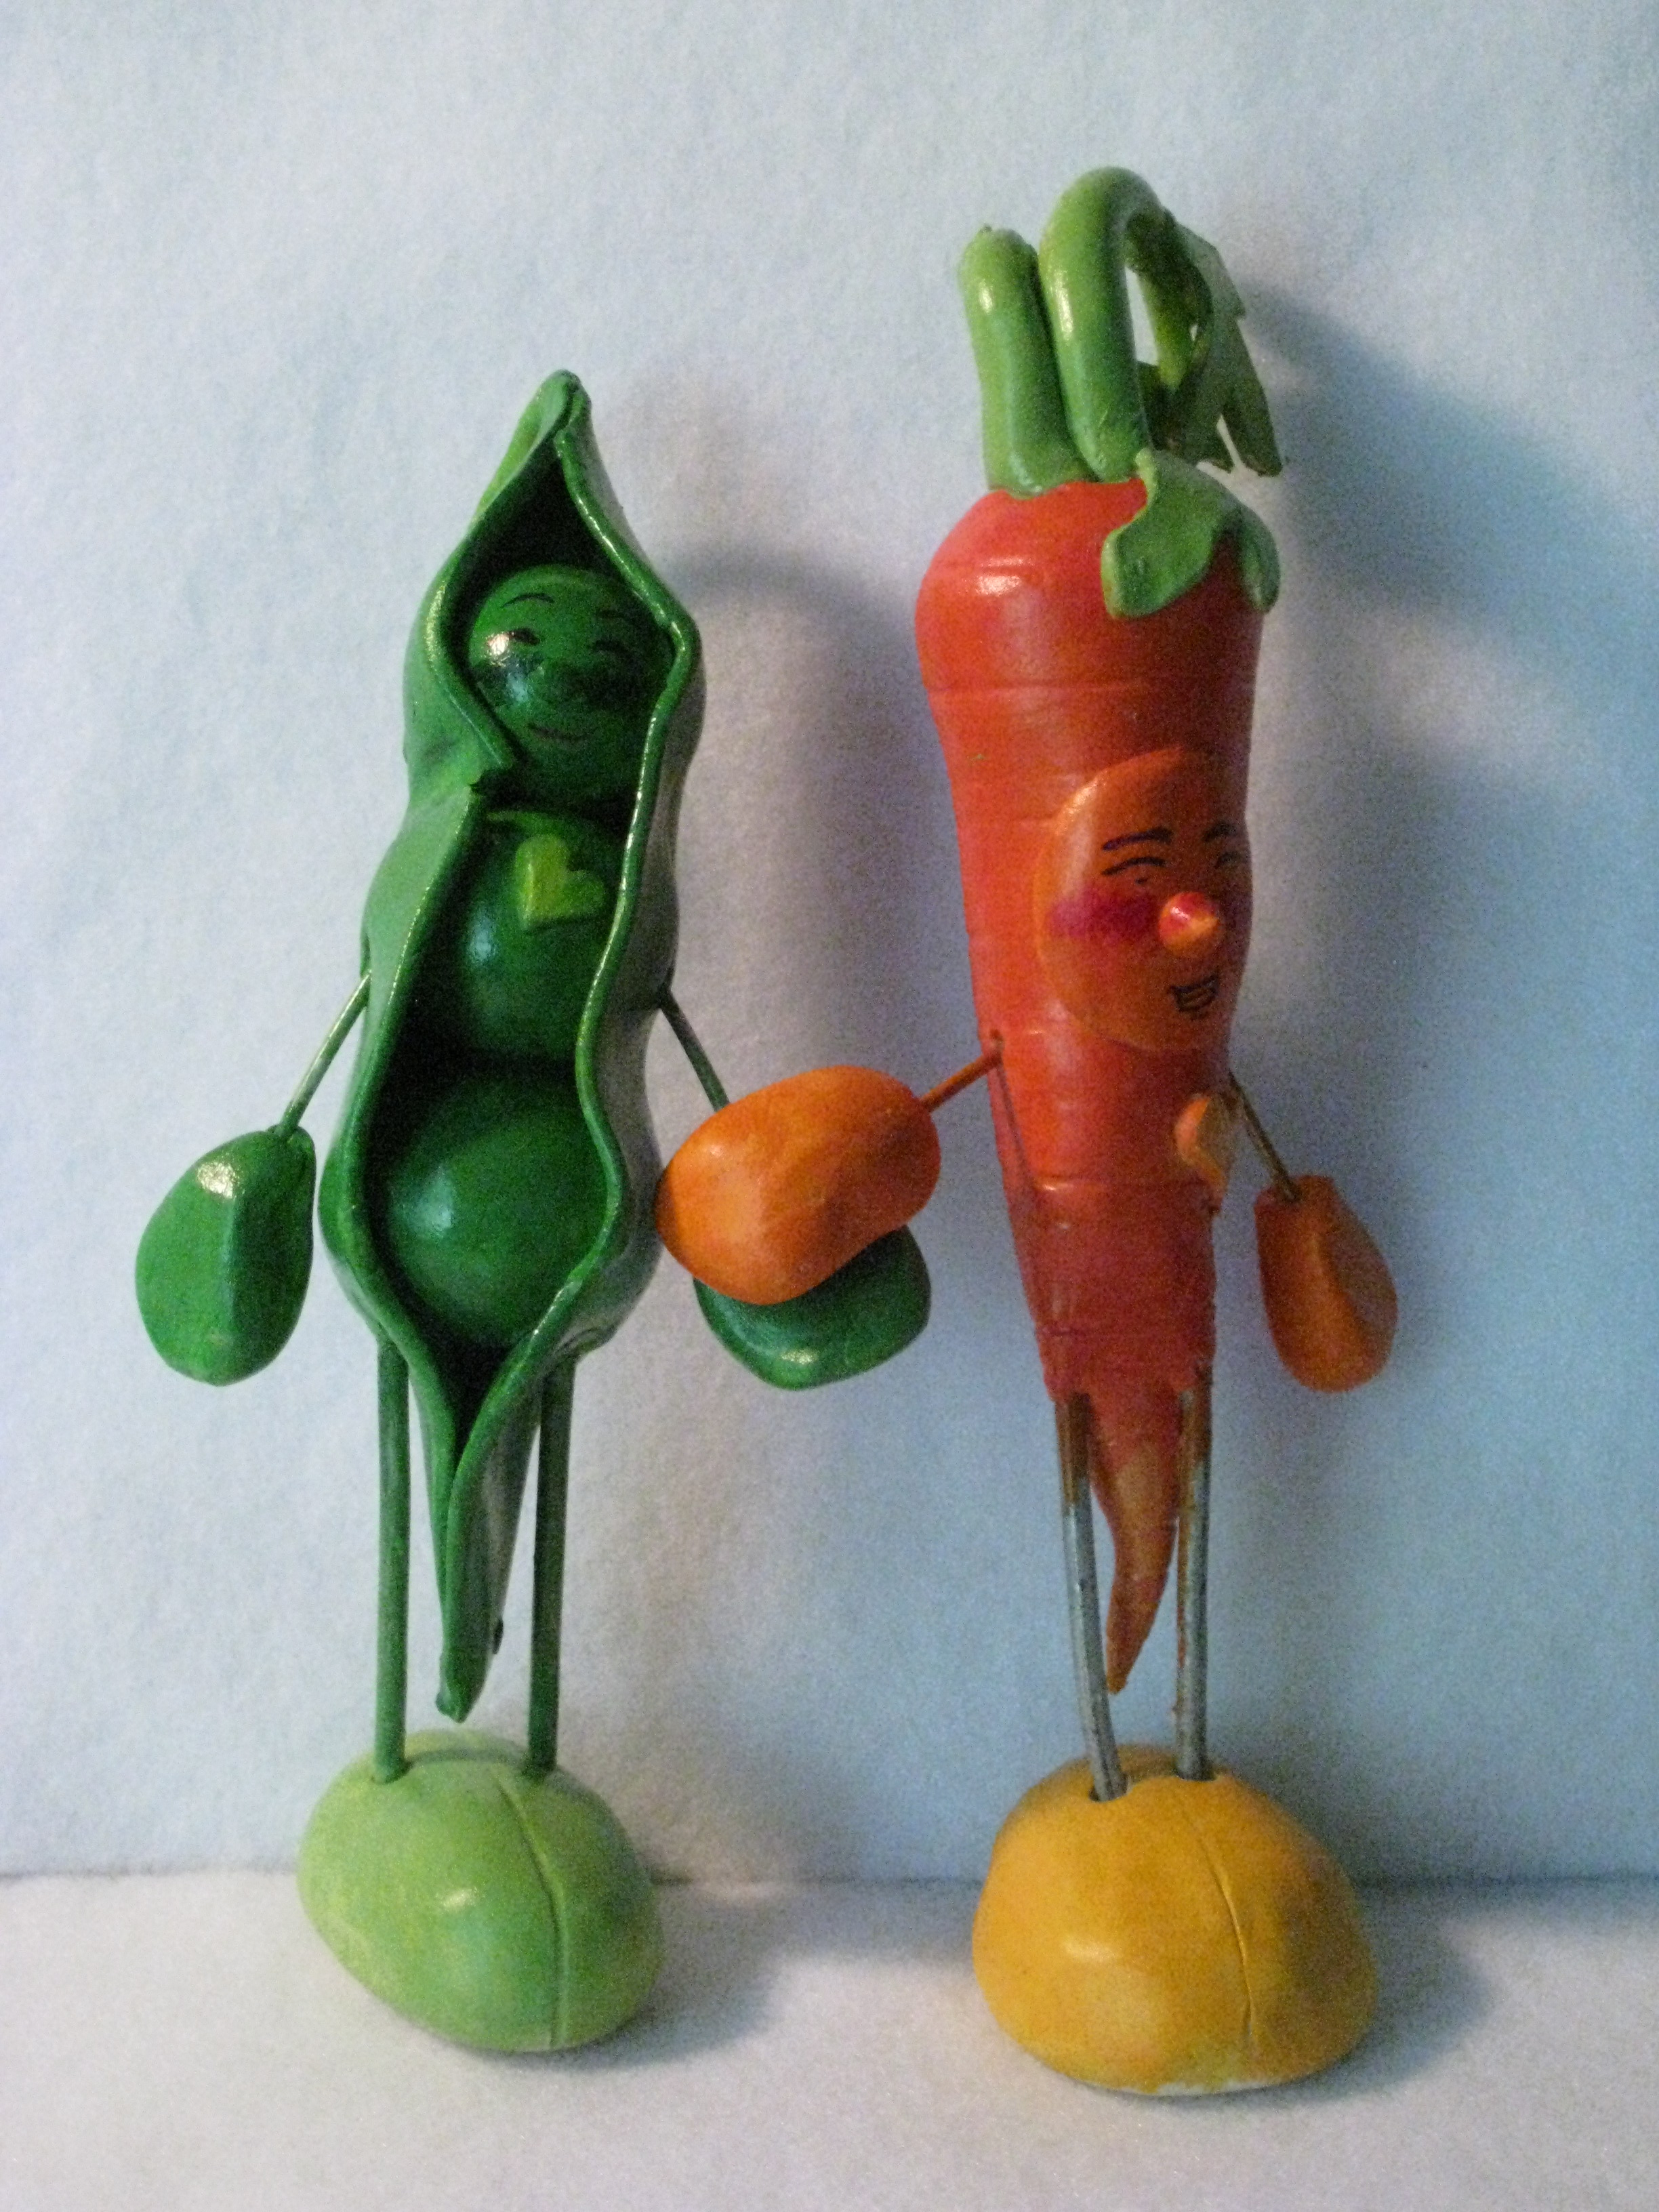 like-peas-and-carrots-by-michirukao-on-deviantart